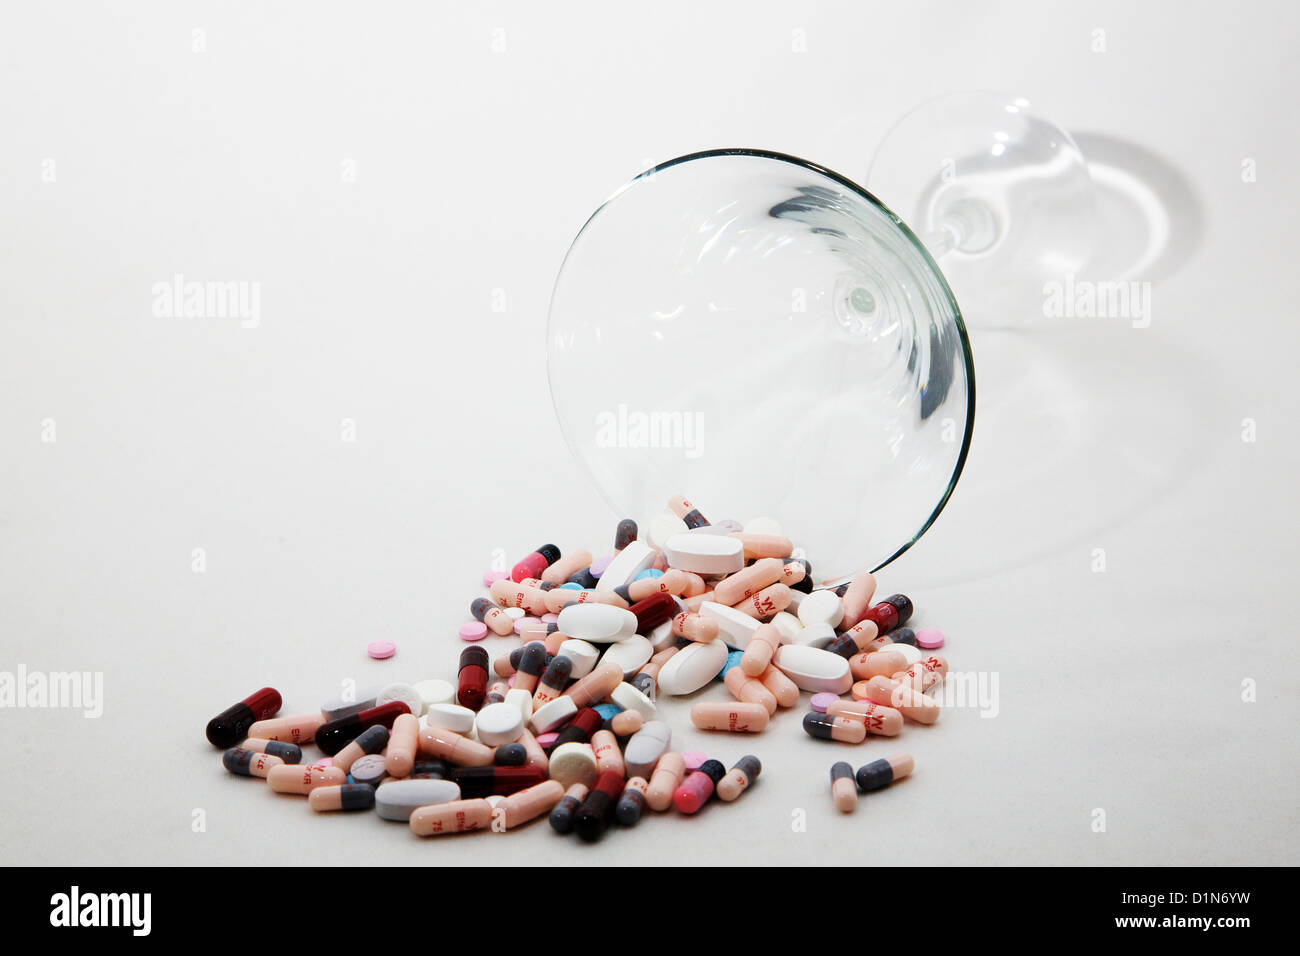 Prescription pills, tablets, capsules spilling from martini glass. White background. Stock Photo